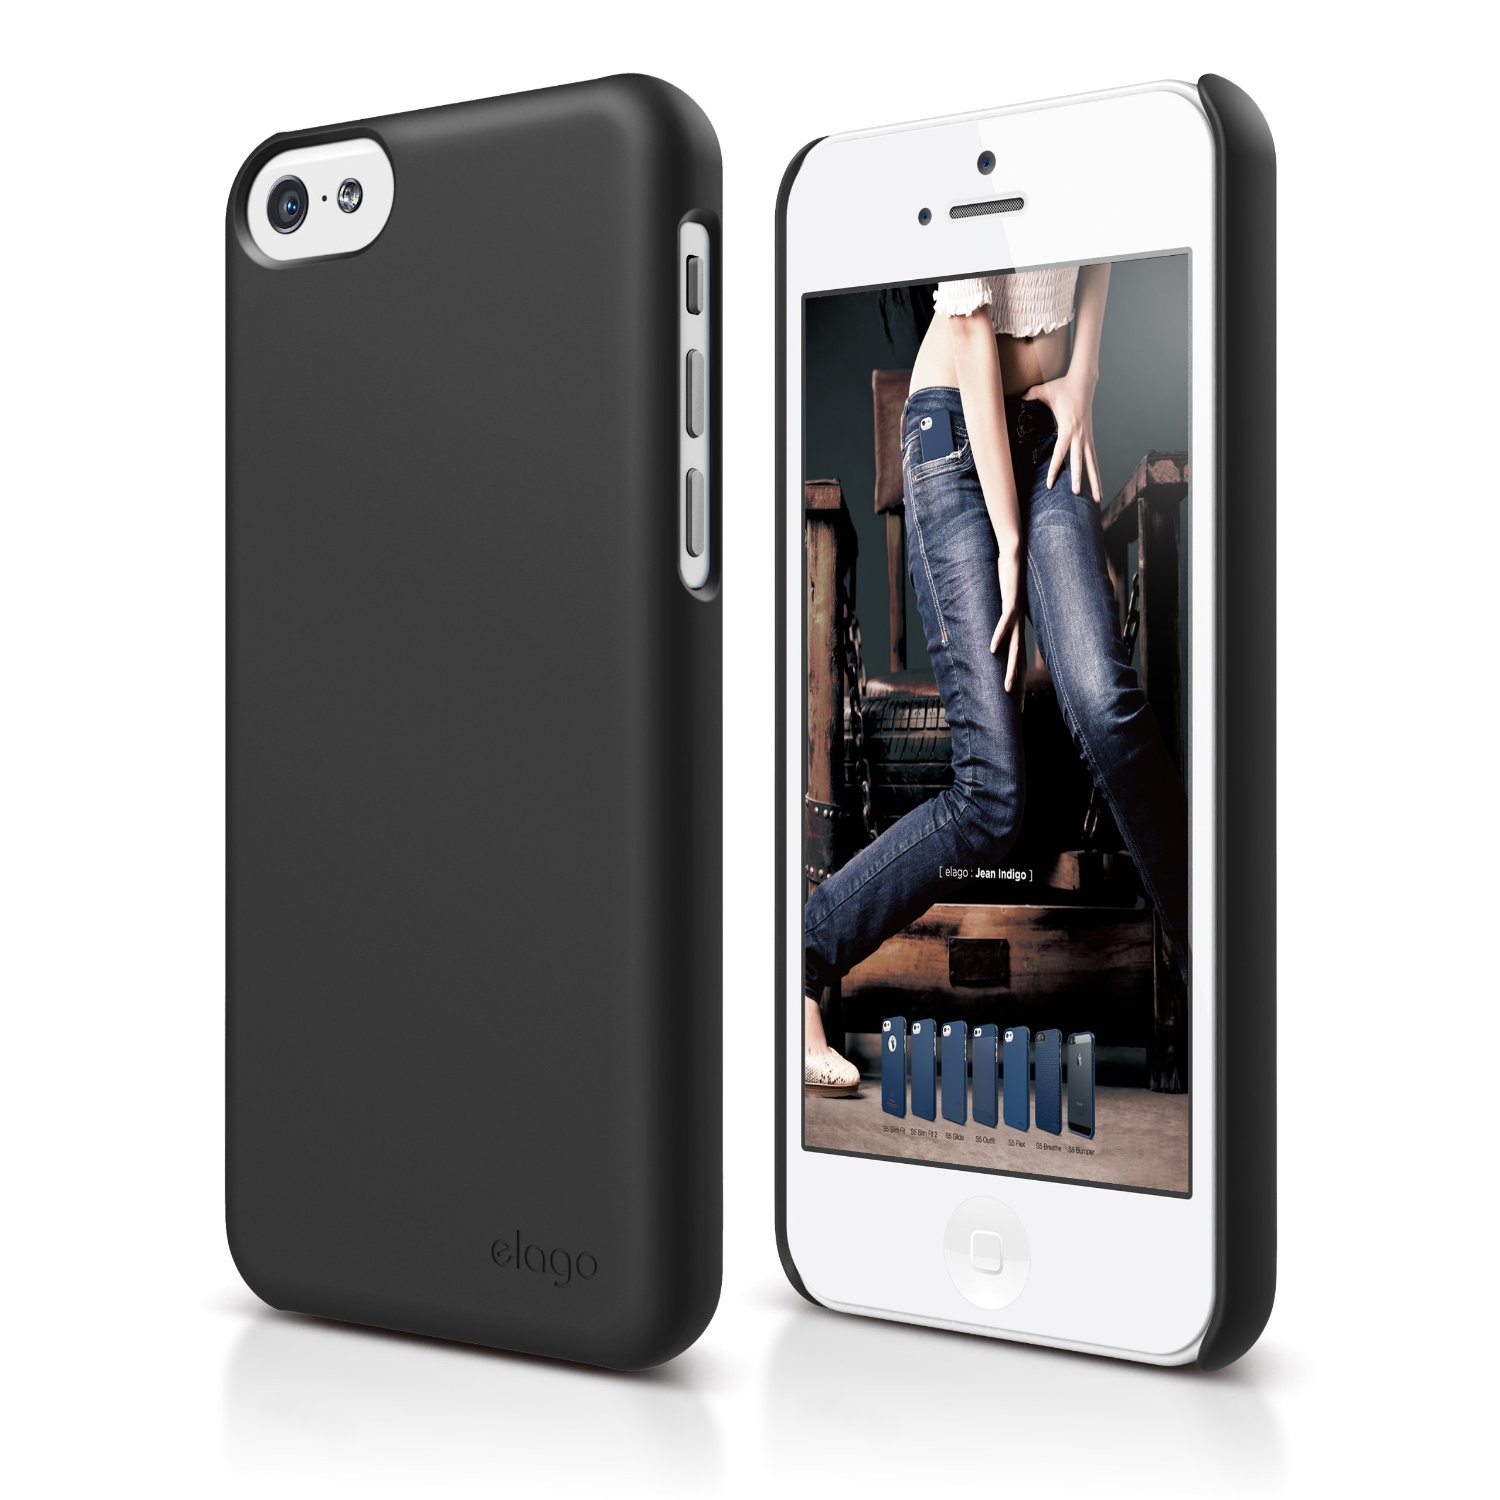 Sara´s Handy IPhone-5C-Cases-Already-Available-372042-2